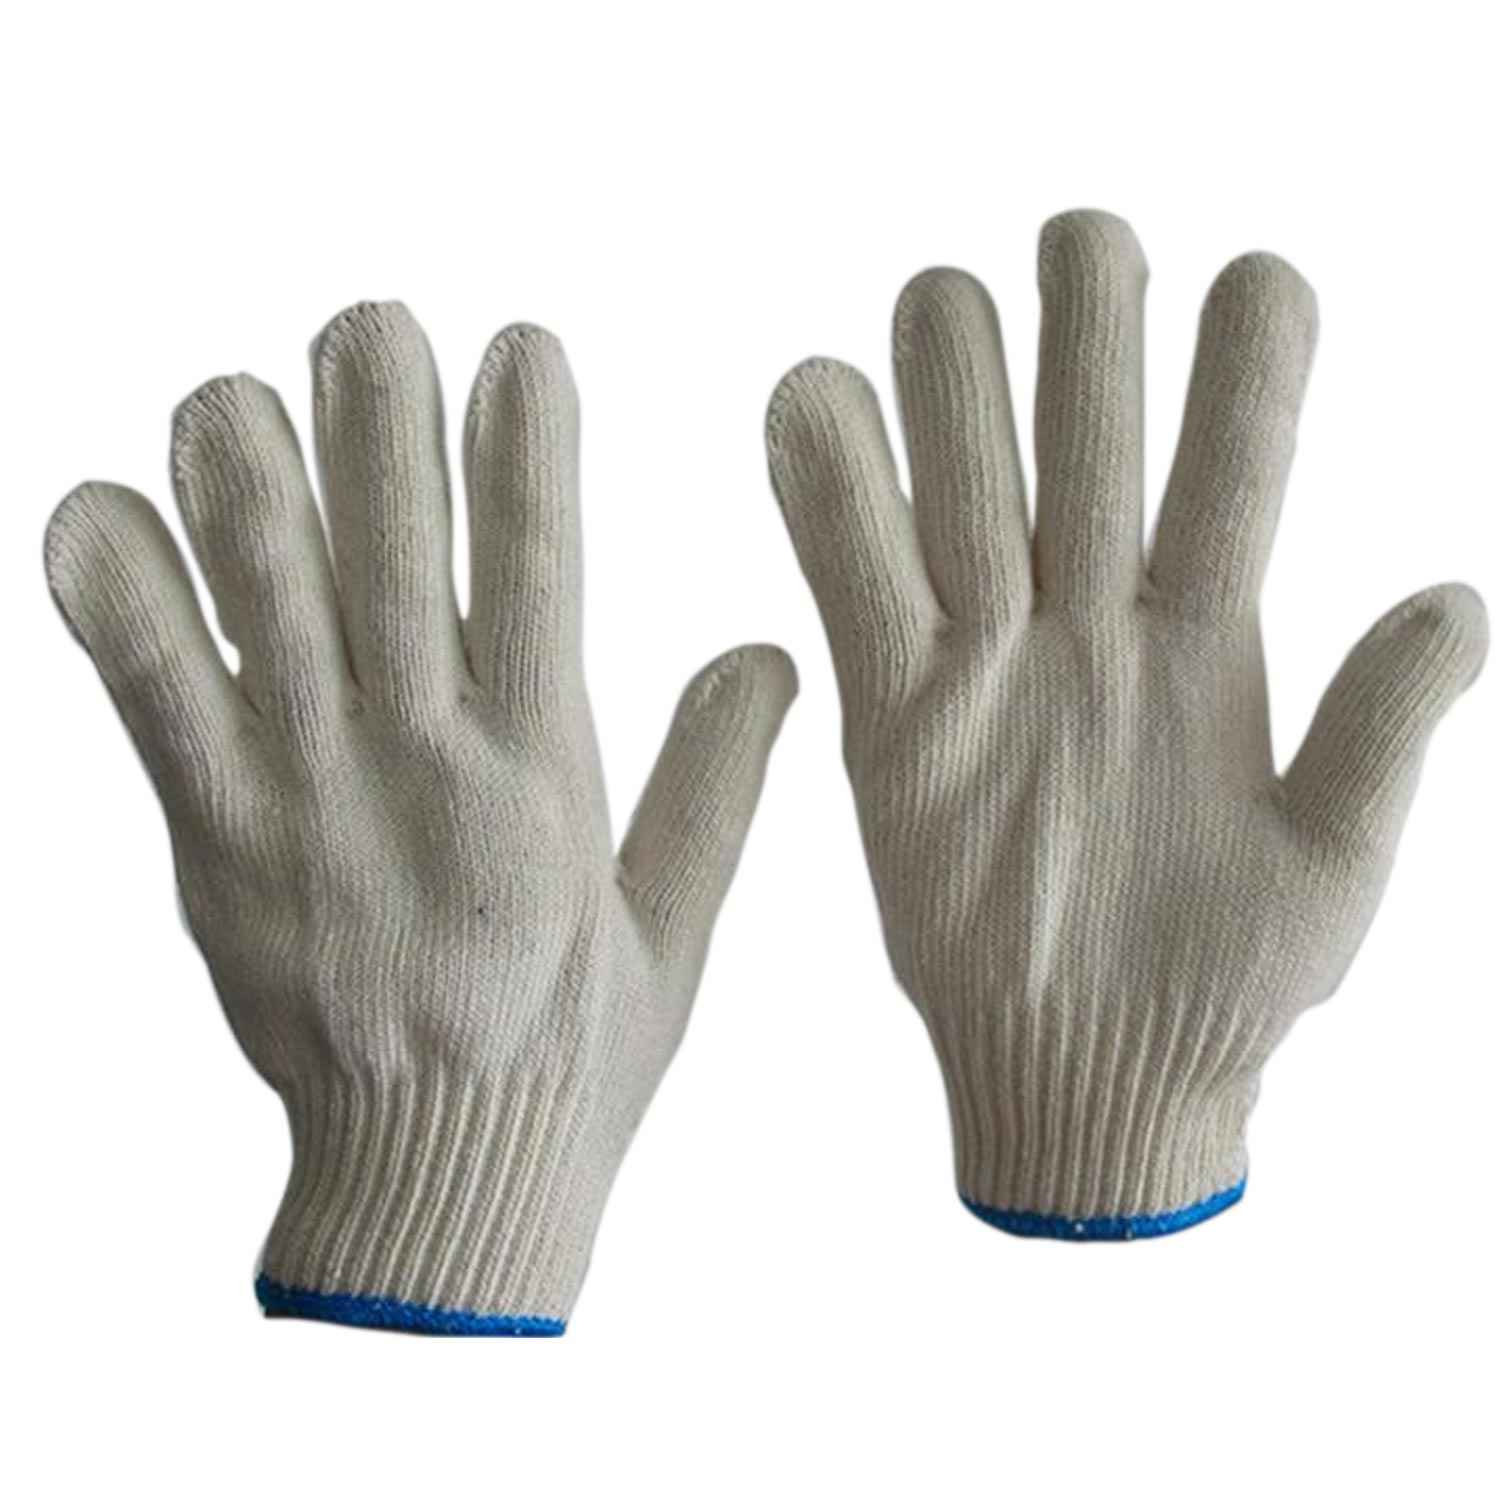 white cotton knit gloves